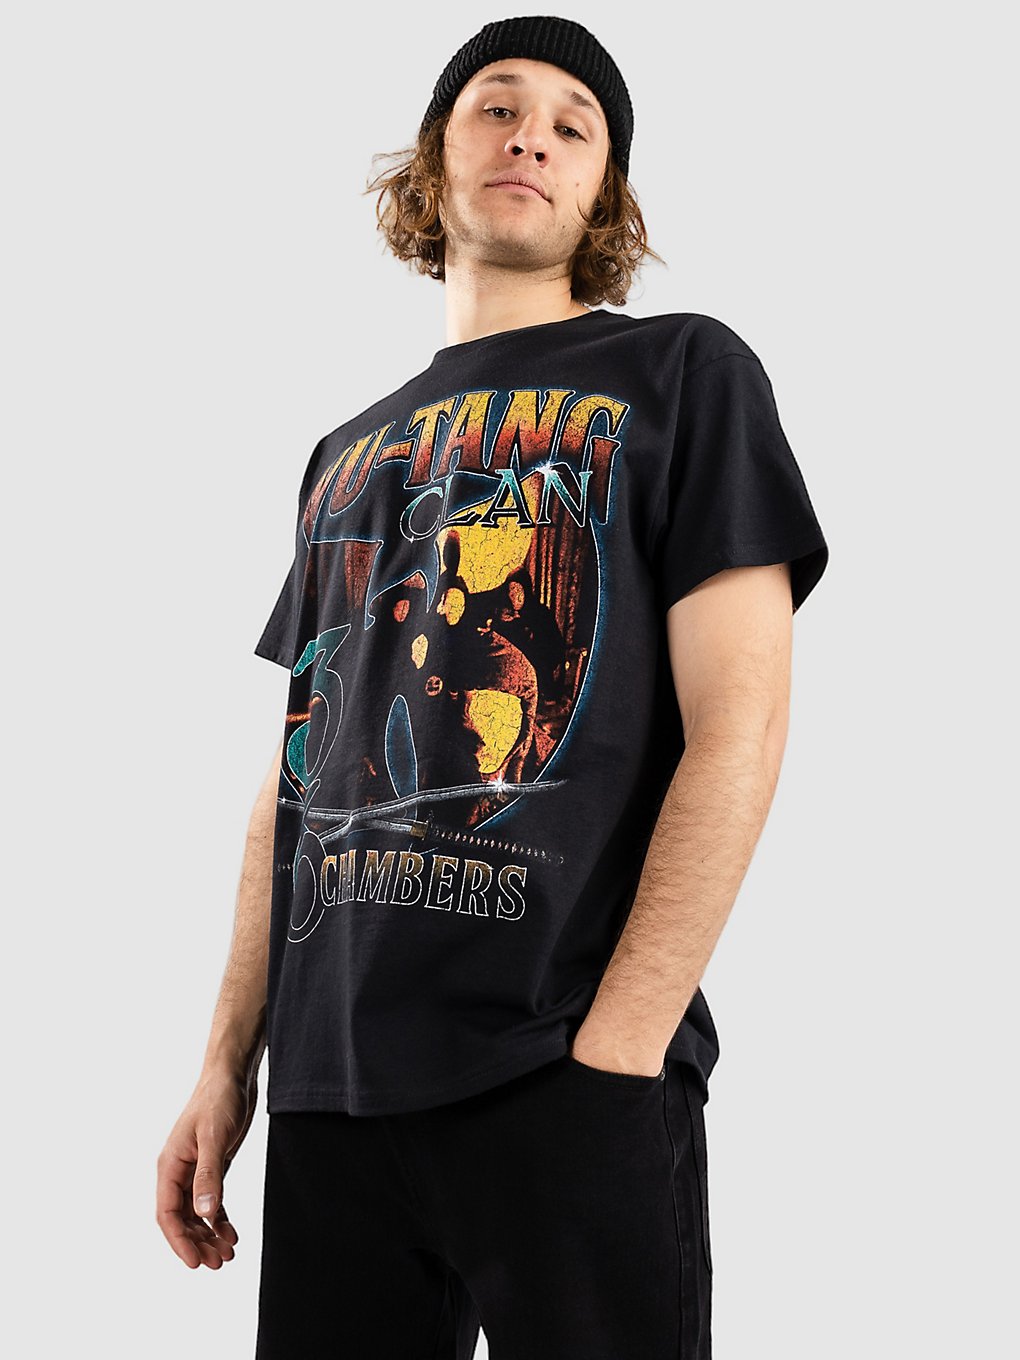 Wu Tang Chambers T-Shirt black kaufen